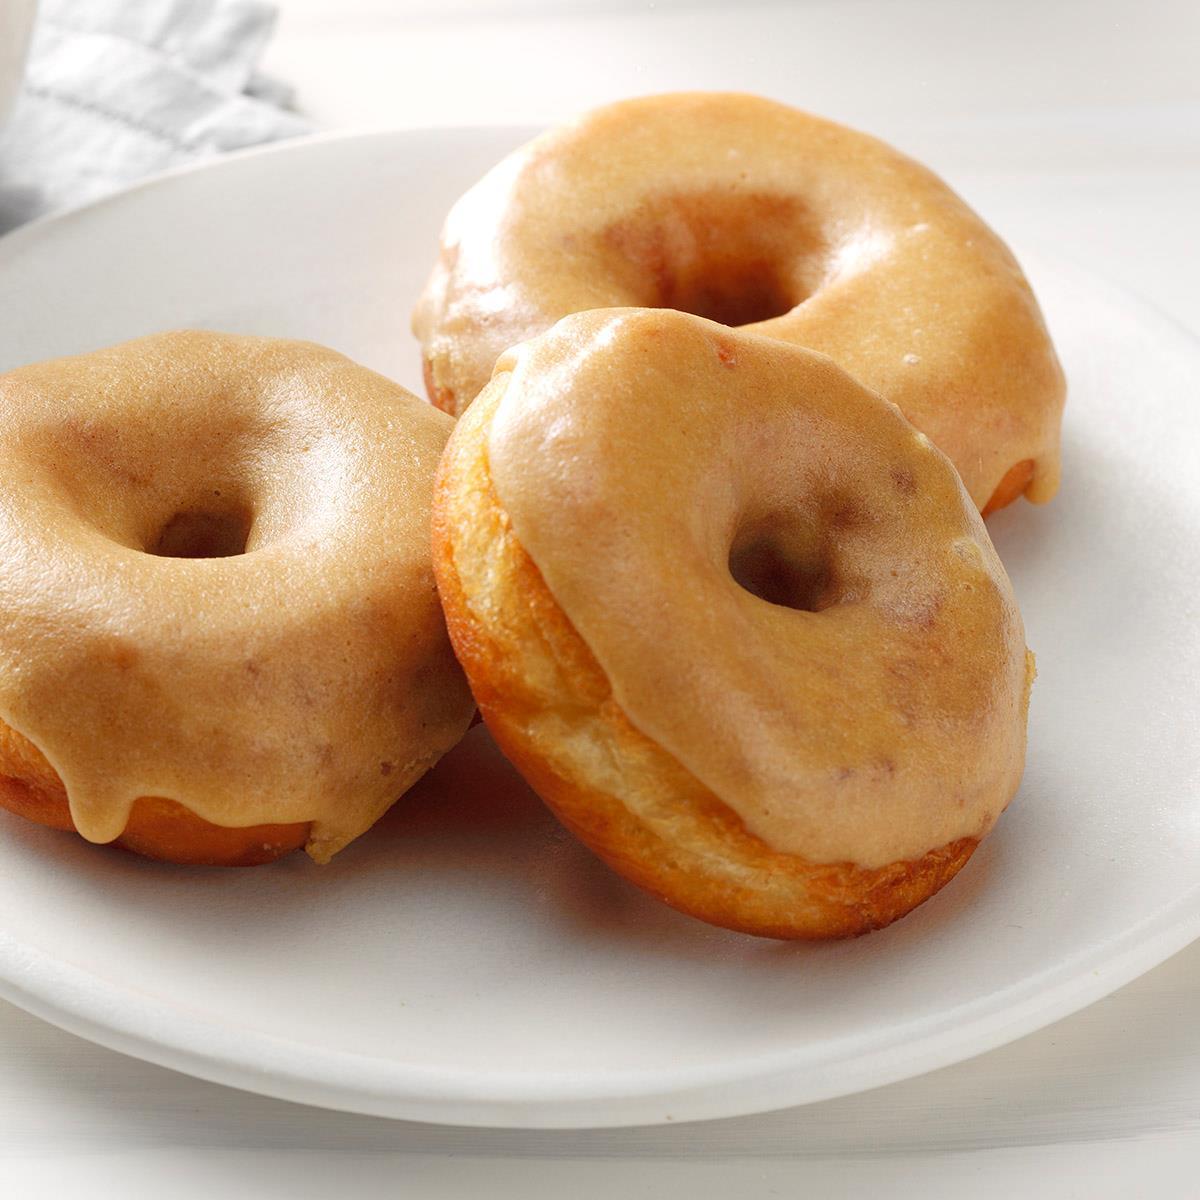 Glazed Doughnuts Recipe: How to Make It